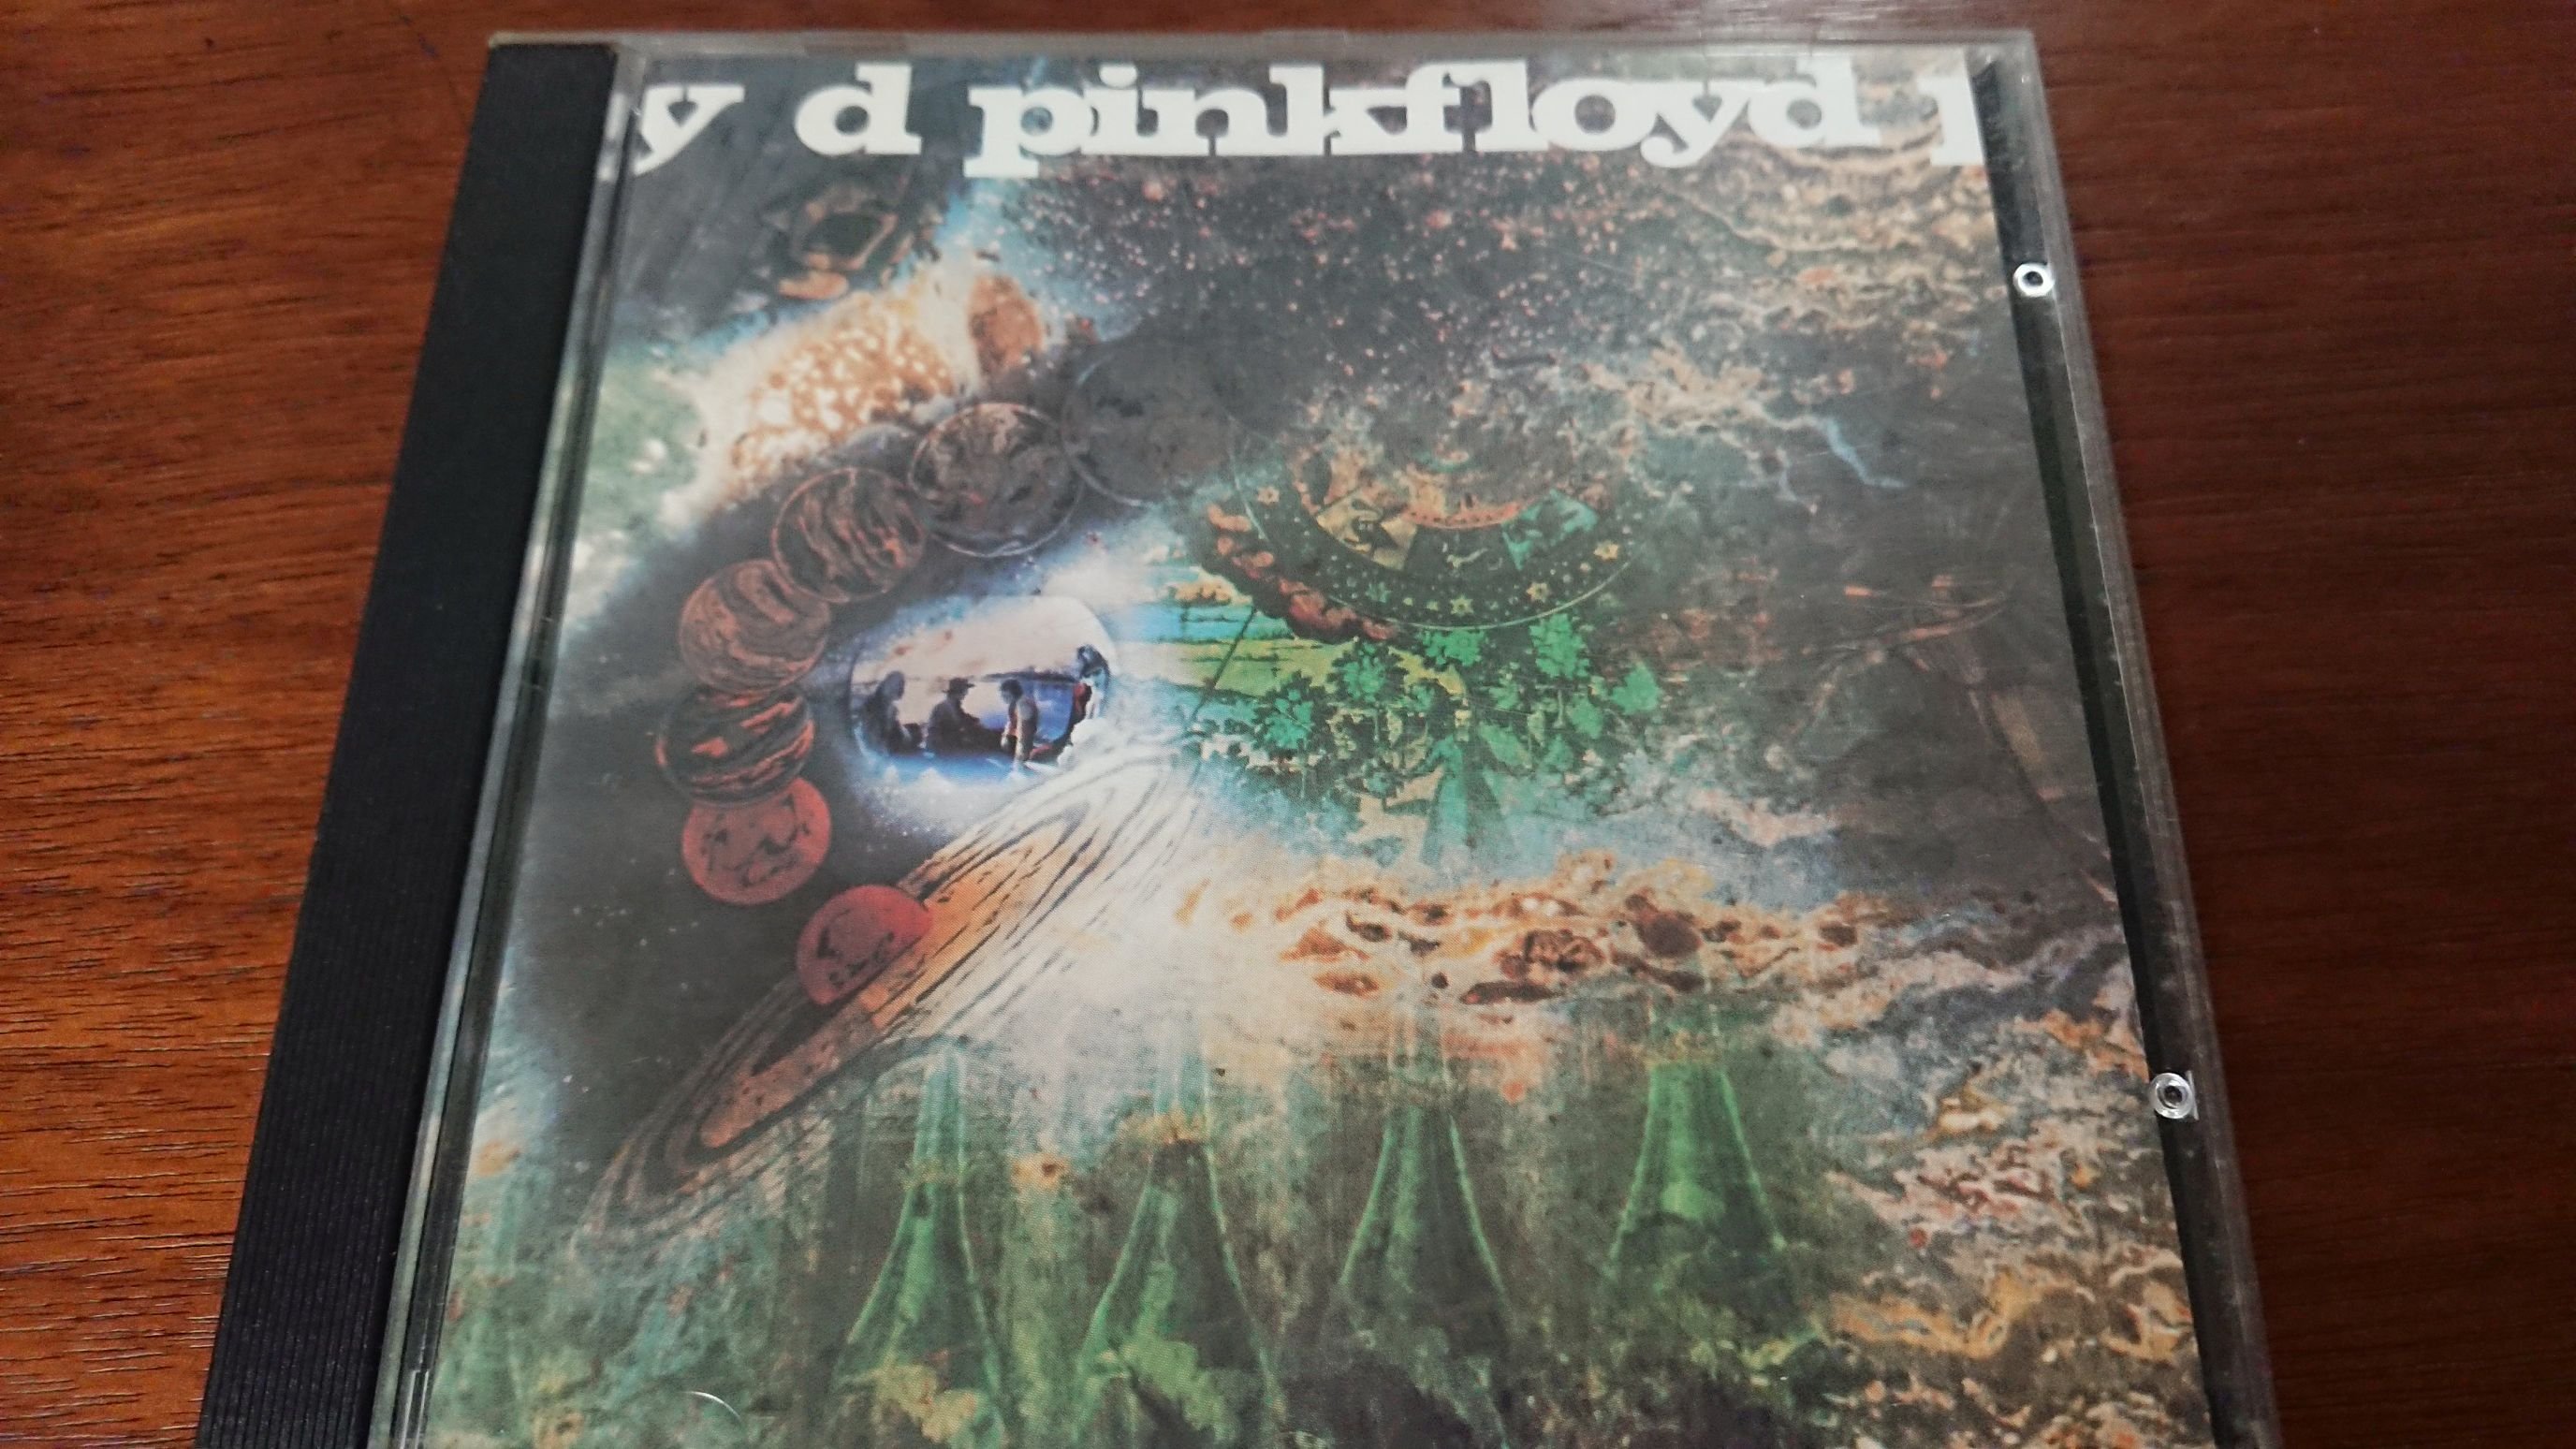 PINK FLOYD a saucerful of secrets 經典西洋搖滾發燒專輯絕版品1994年版